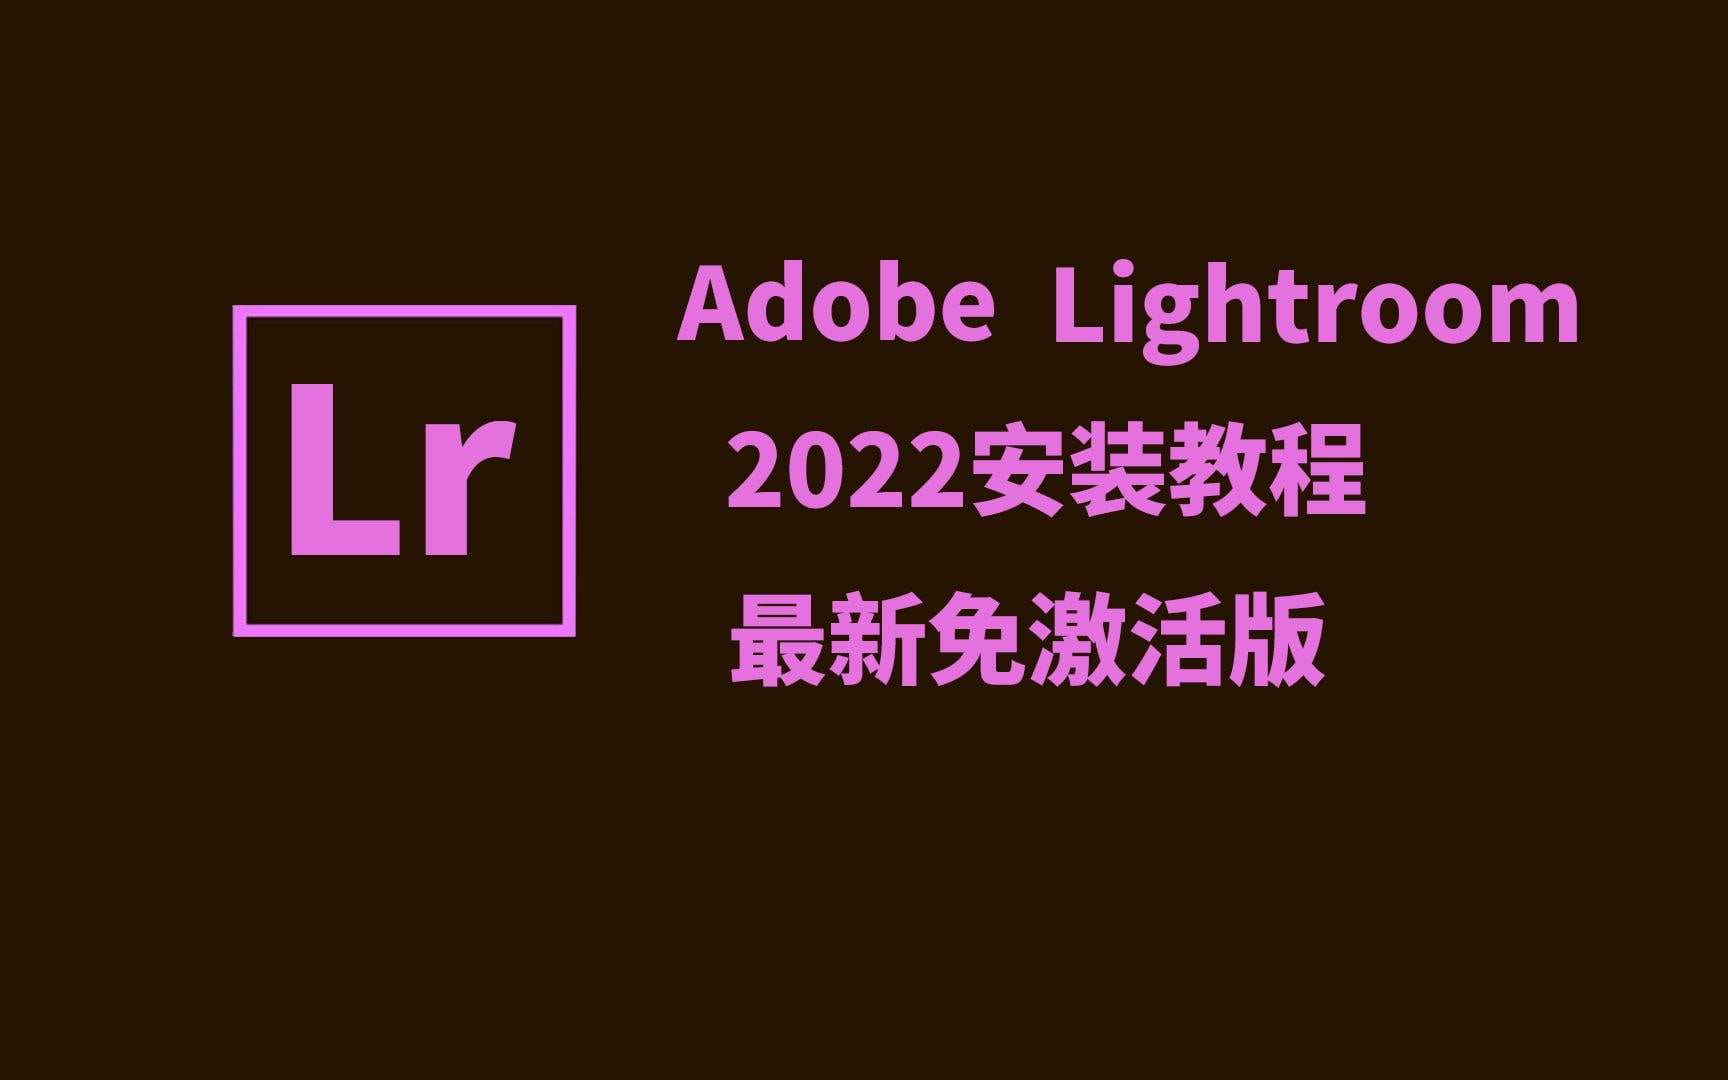 Adobe Lightroom 2022电脑版下载|图像编辑工具Adobe Lightroom破解安装包分享